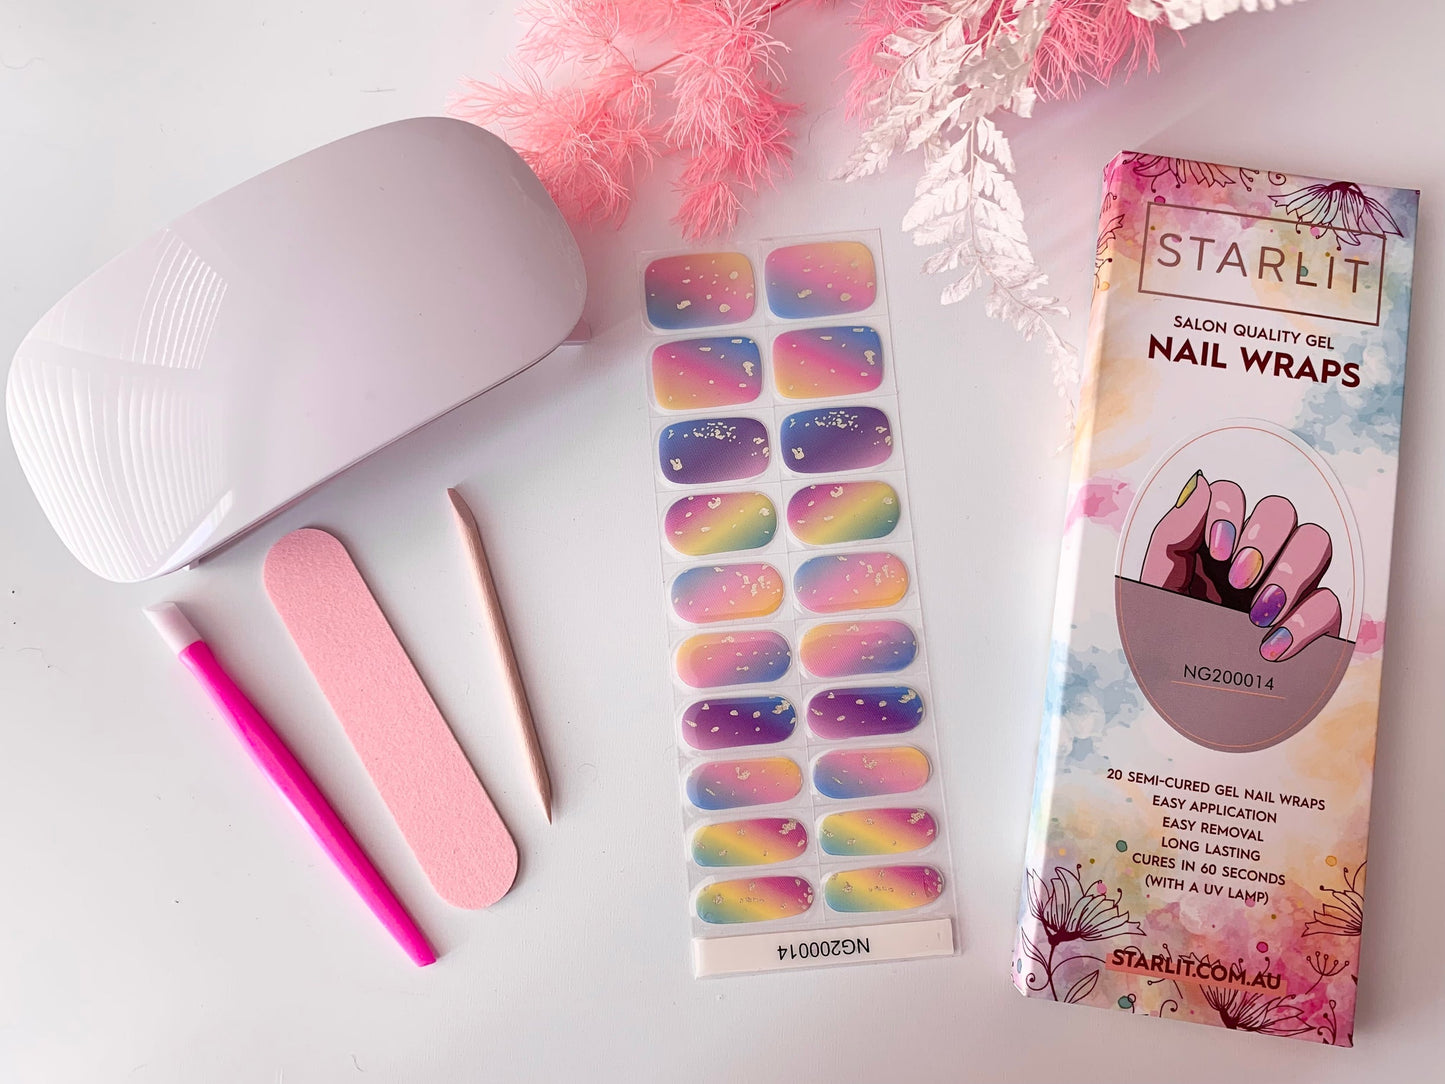 Meet The Rainbow Semi-Cured Gel Nail Wrap